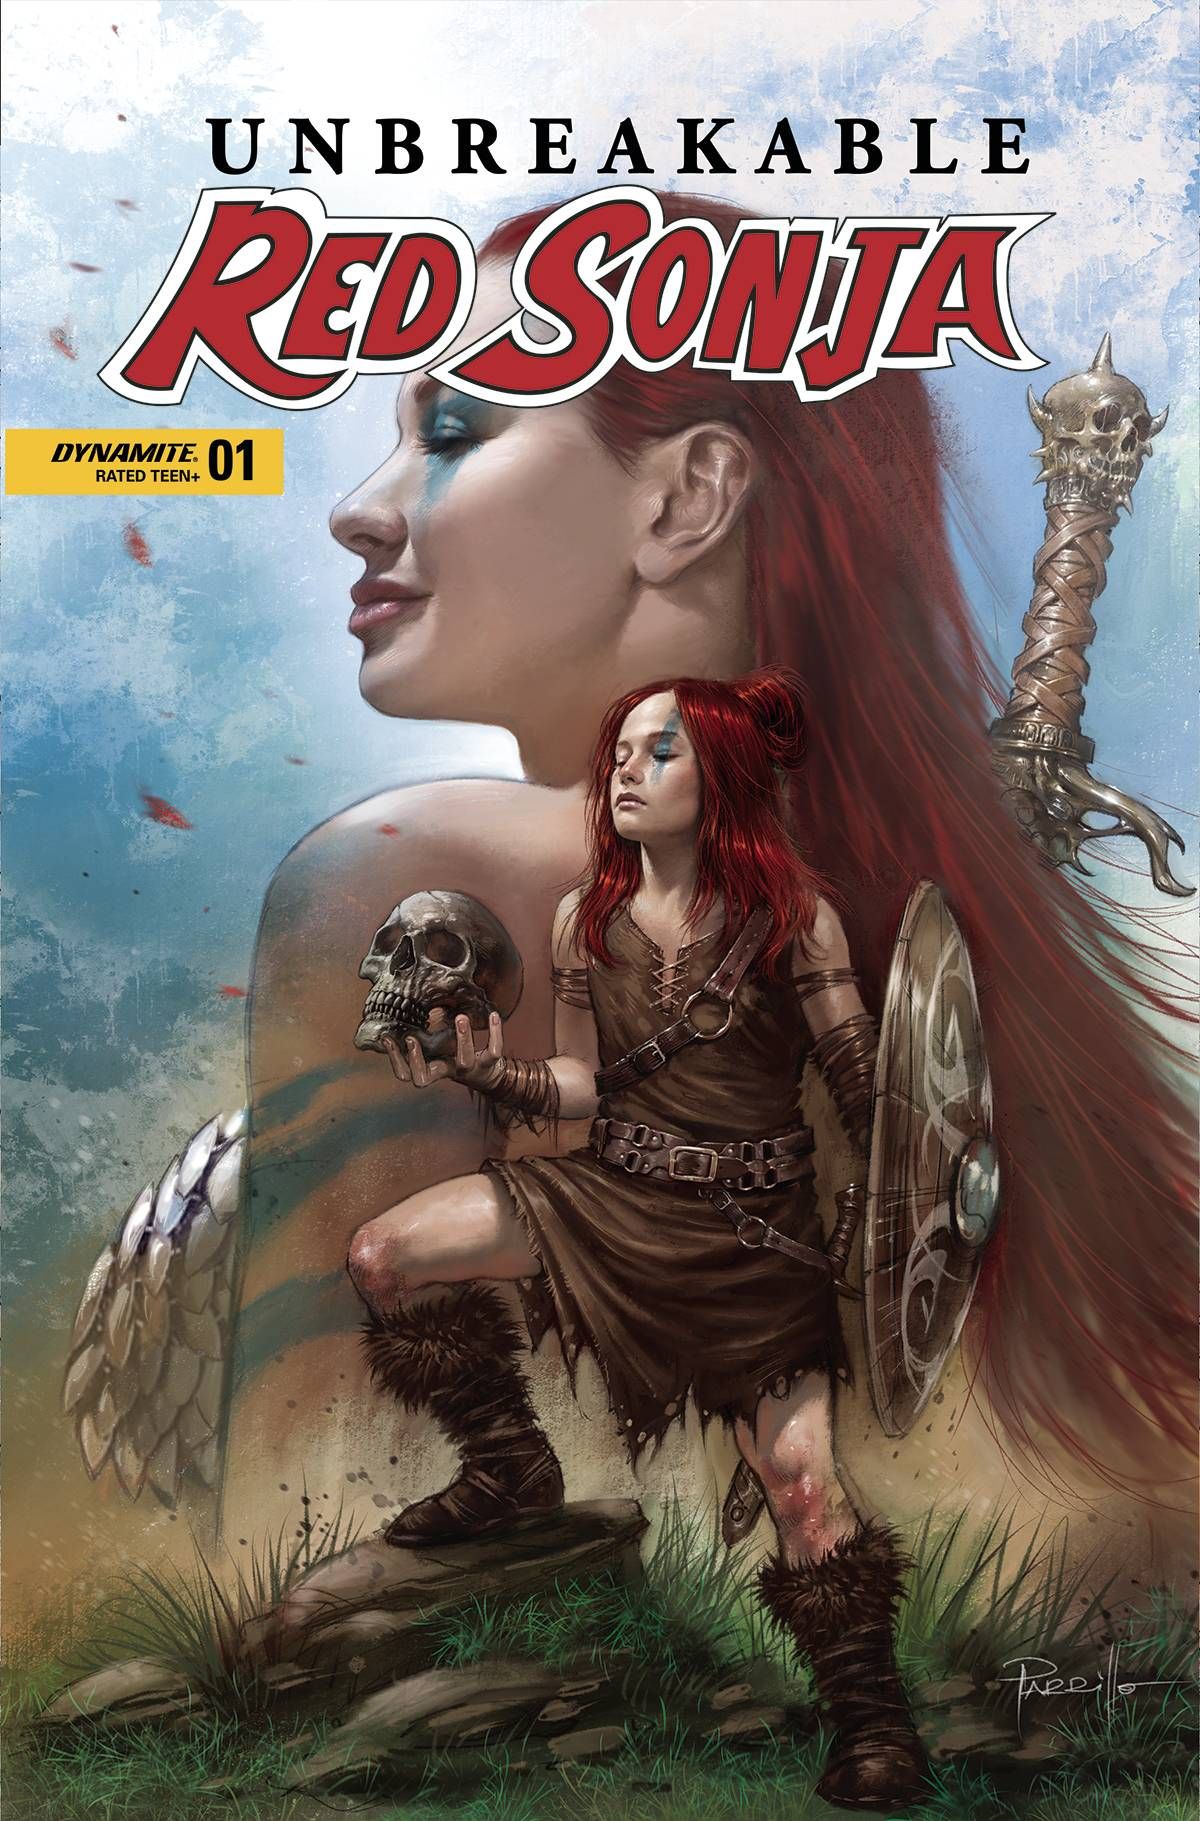 Unbreakable Red Sonja #1 Comic